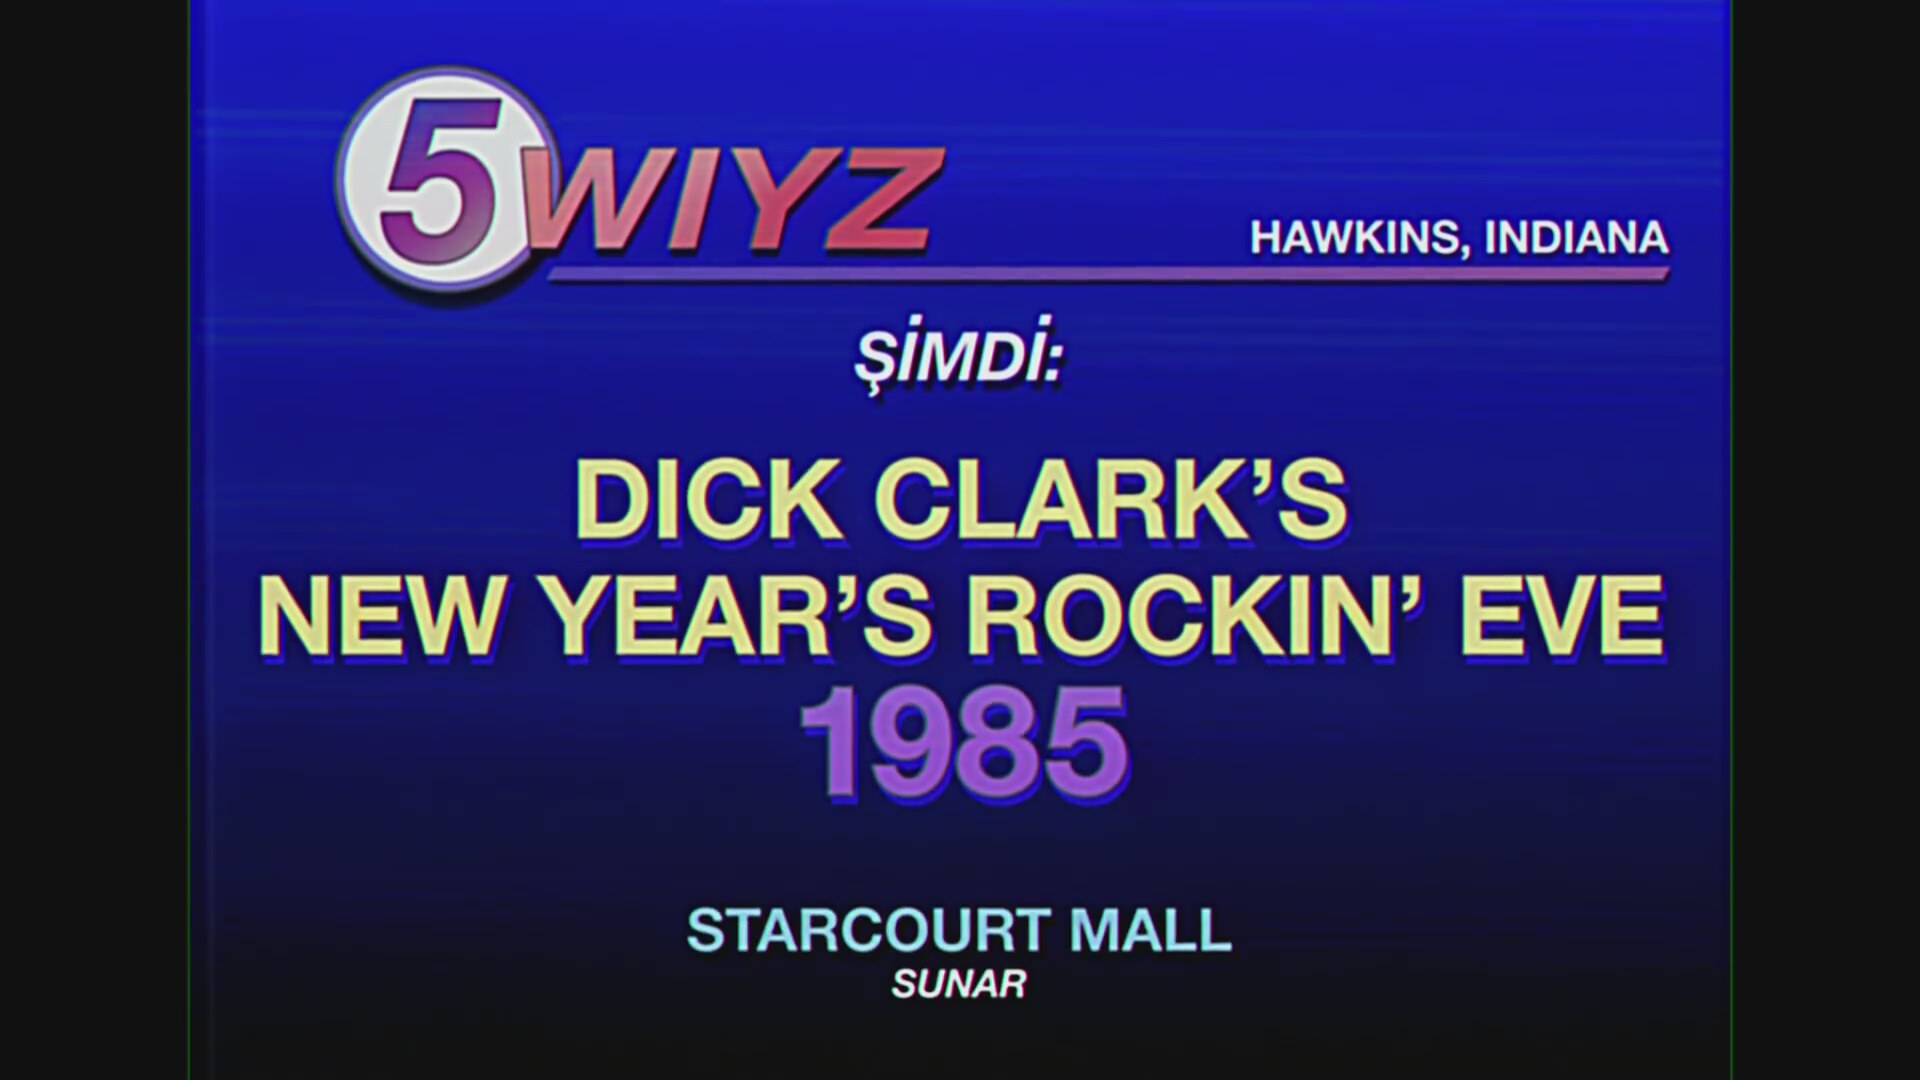 Dick clarks new years rockin eve 1985